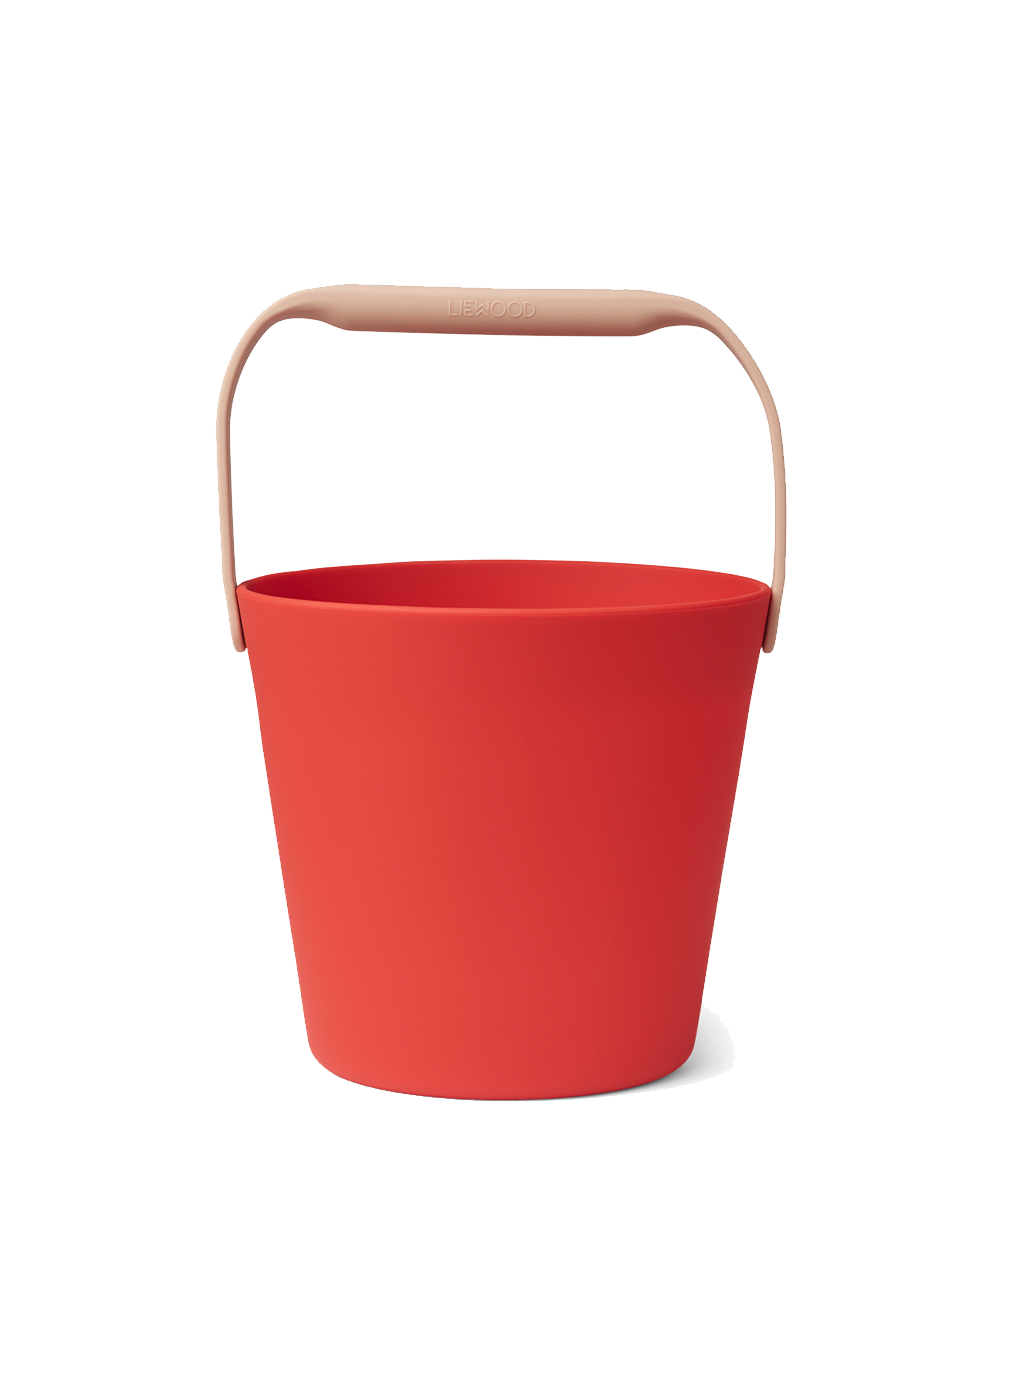 silicone bucket